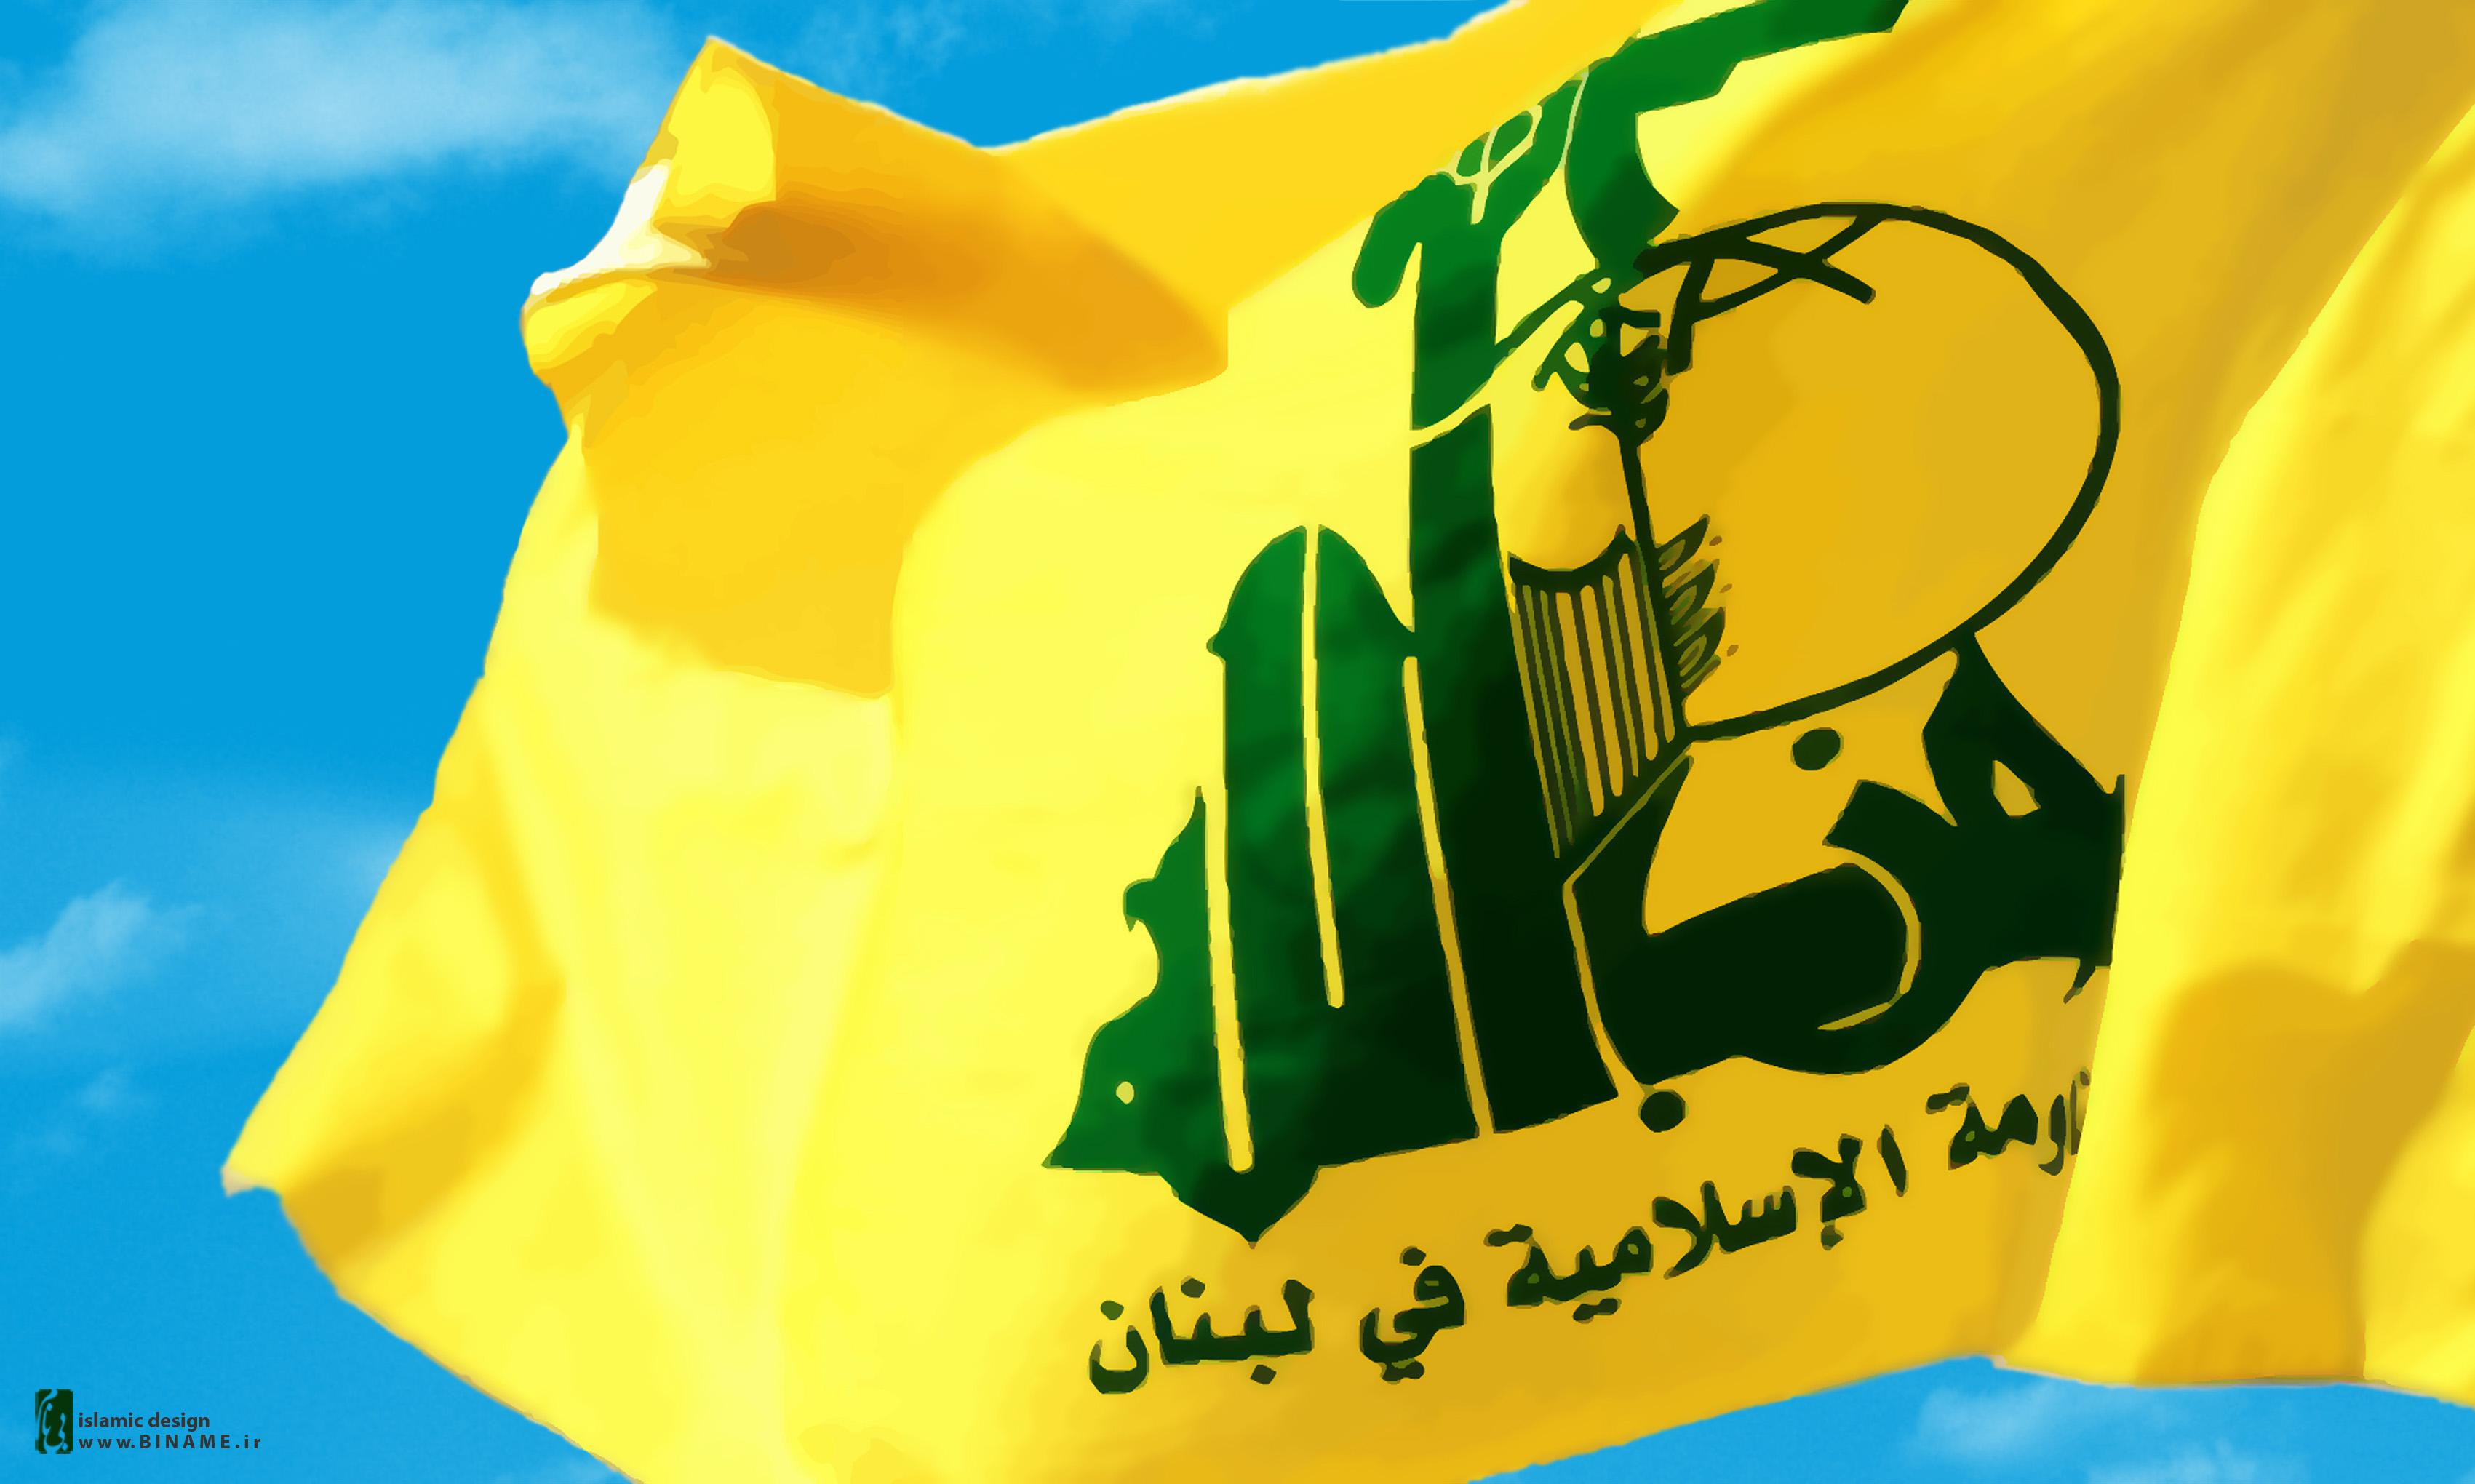 Al-Saud is Criminal and Source of Terrorism: Hezbollah